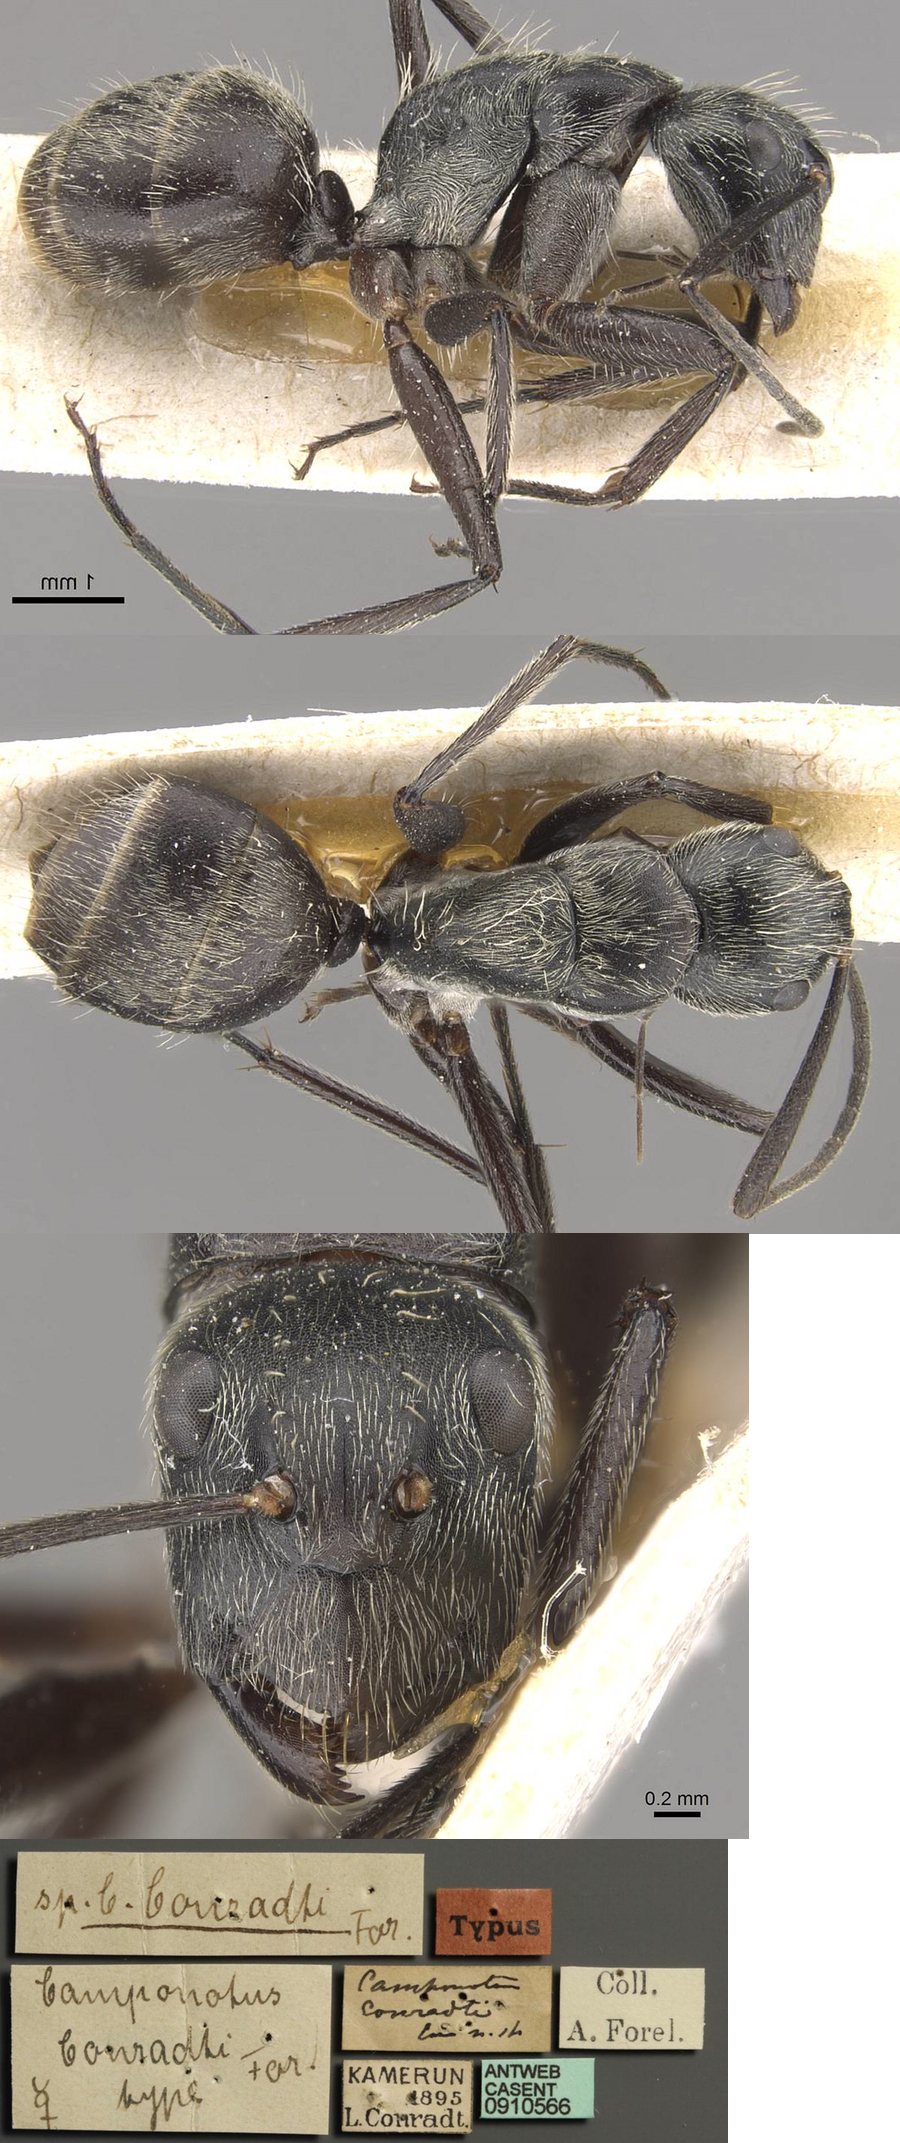 Camponotus conradti